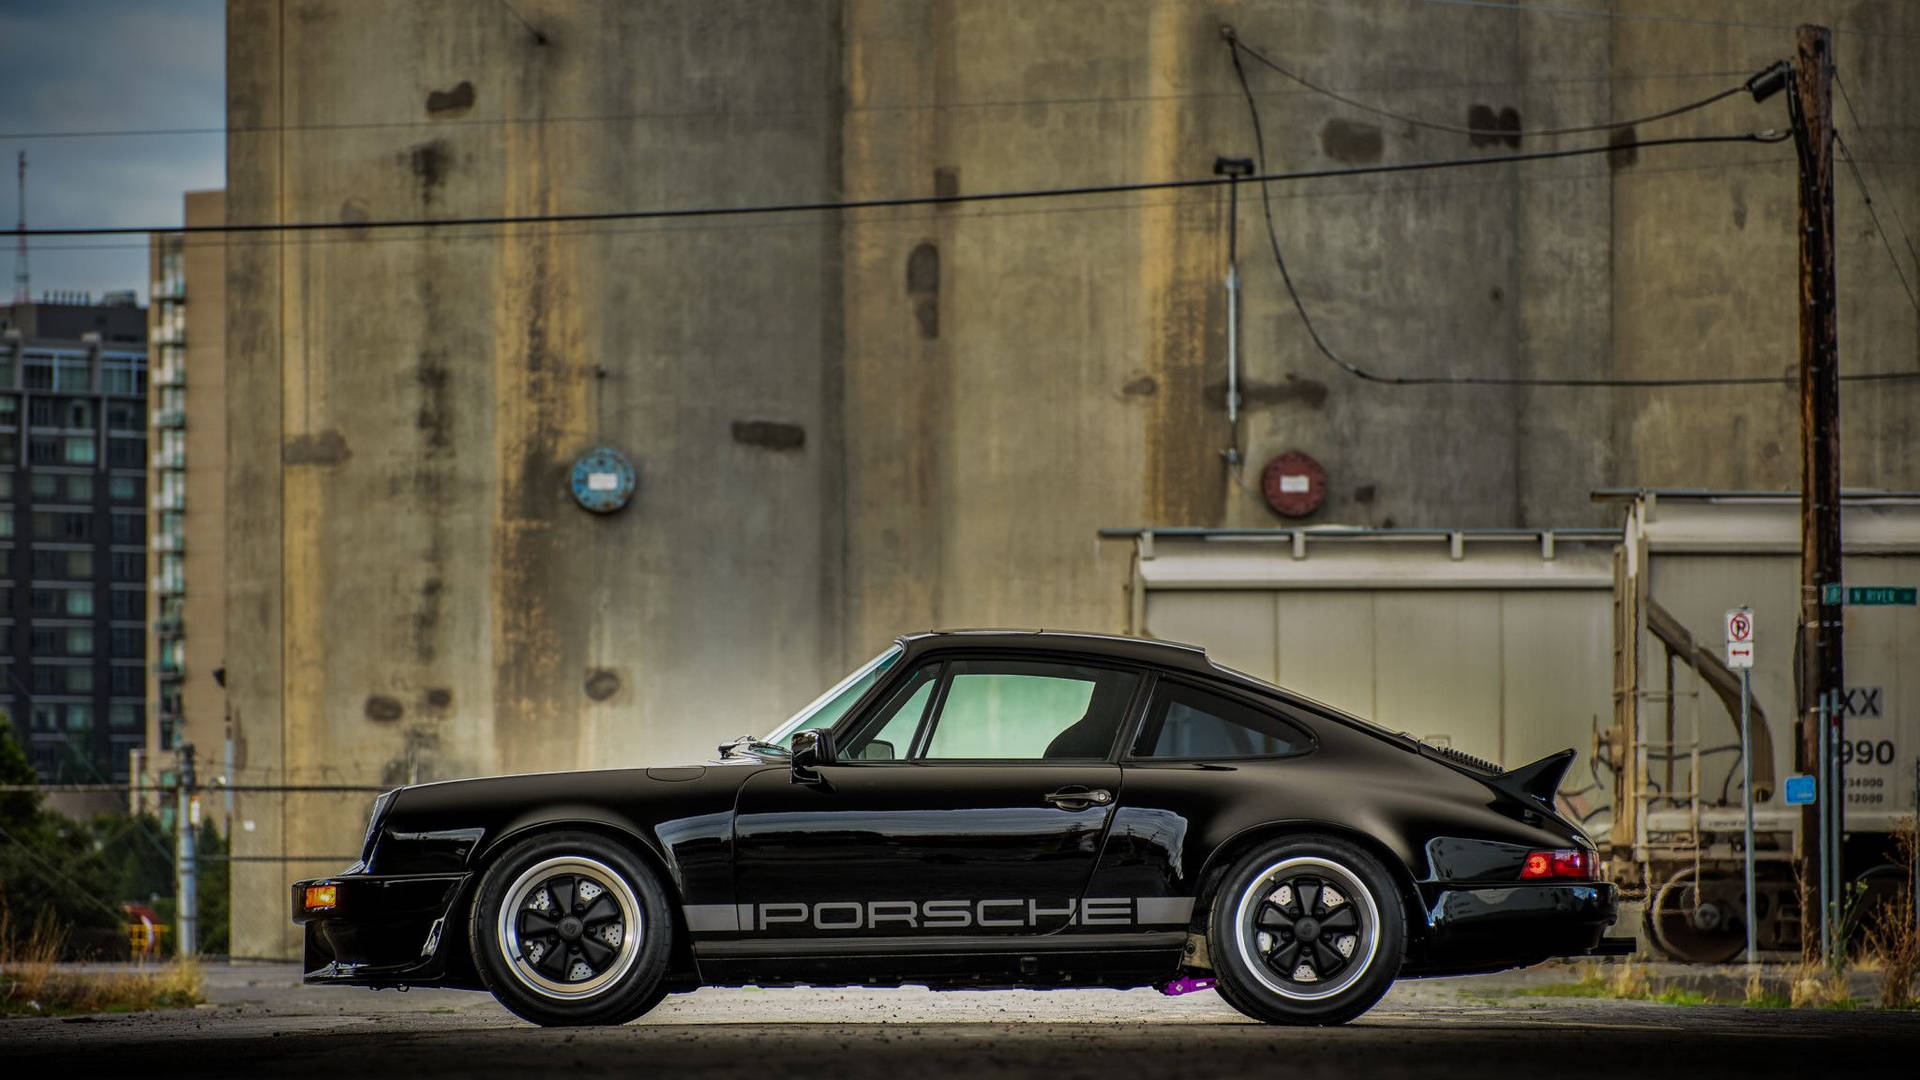 Porsche 911 In Glossy Black Paint Background